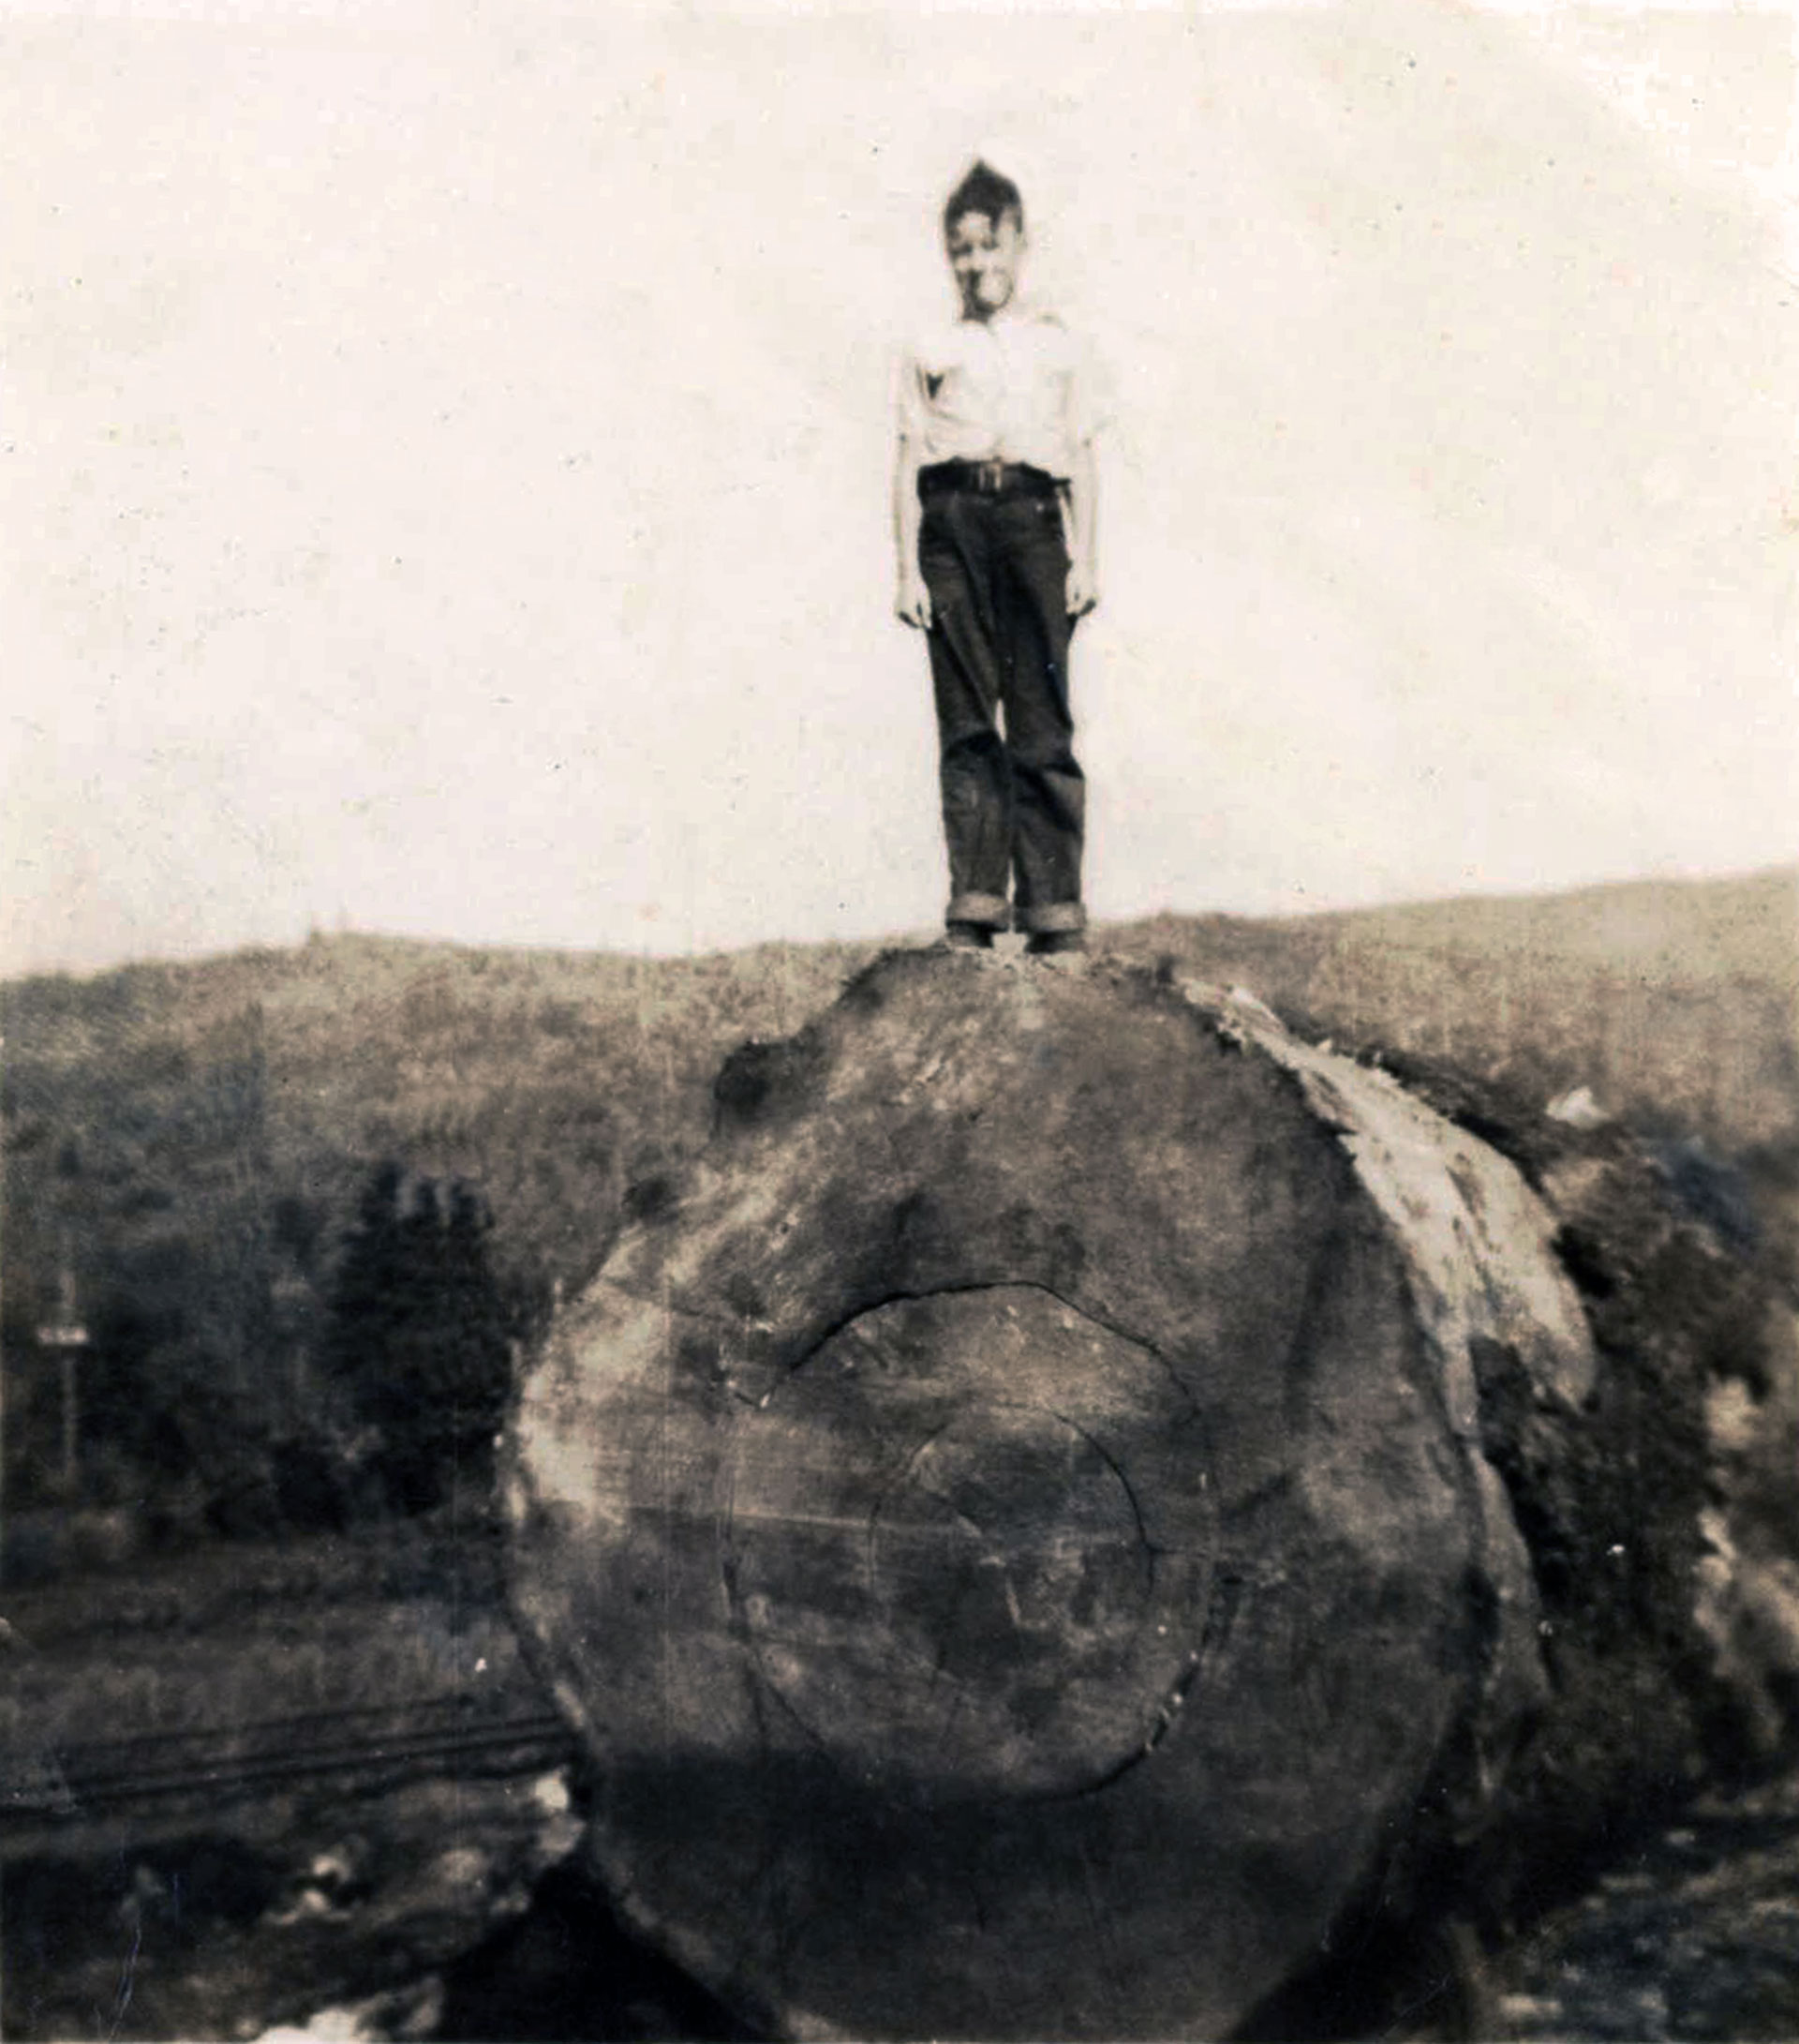 David Burch on a giant log in Ryderwood.